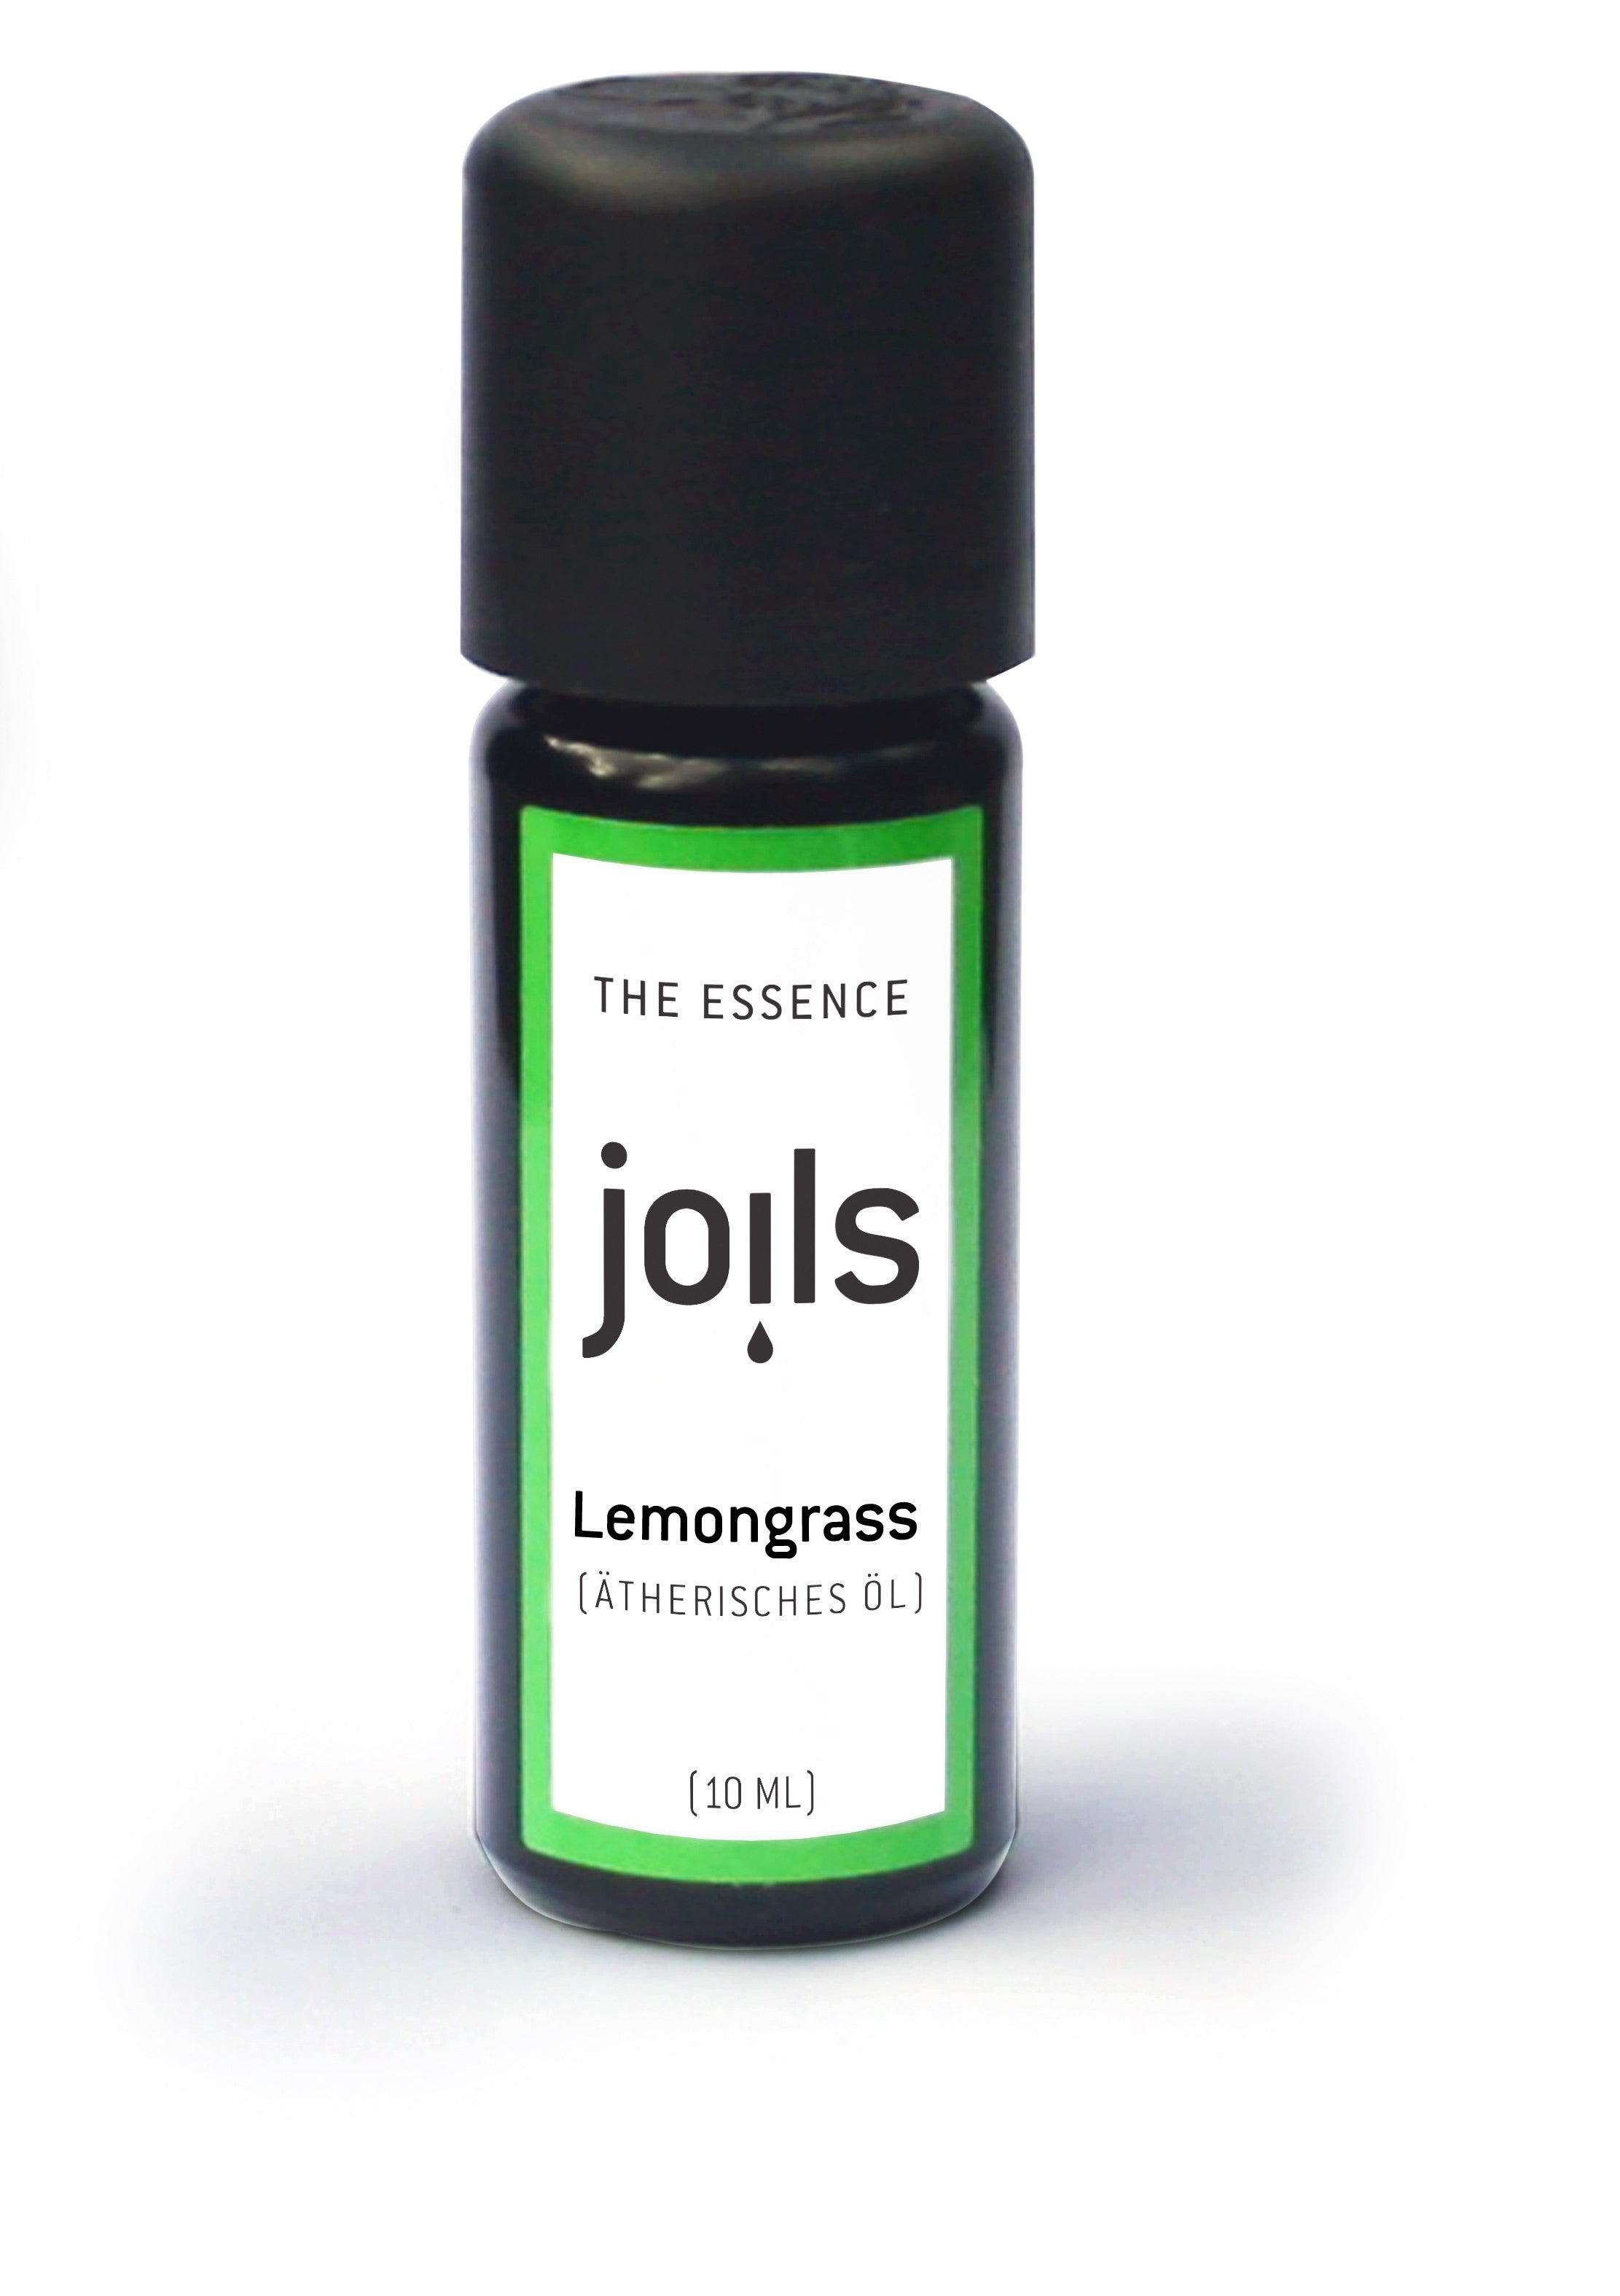 LEMONGRASS 10ml - Joils